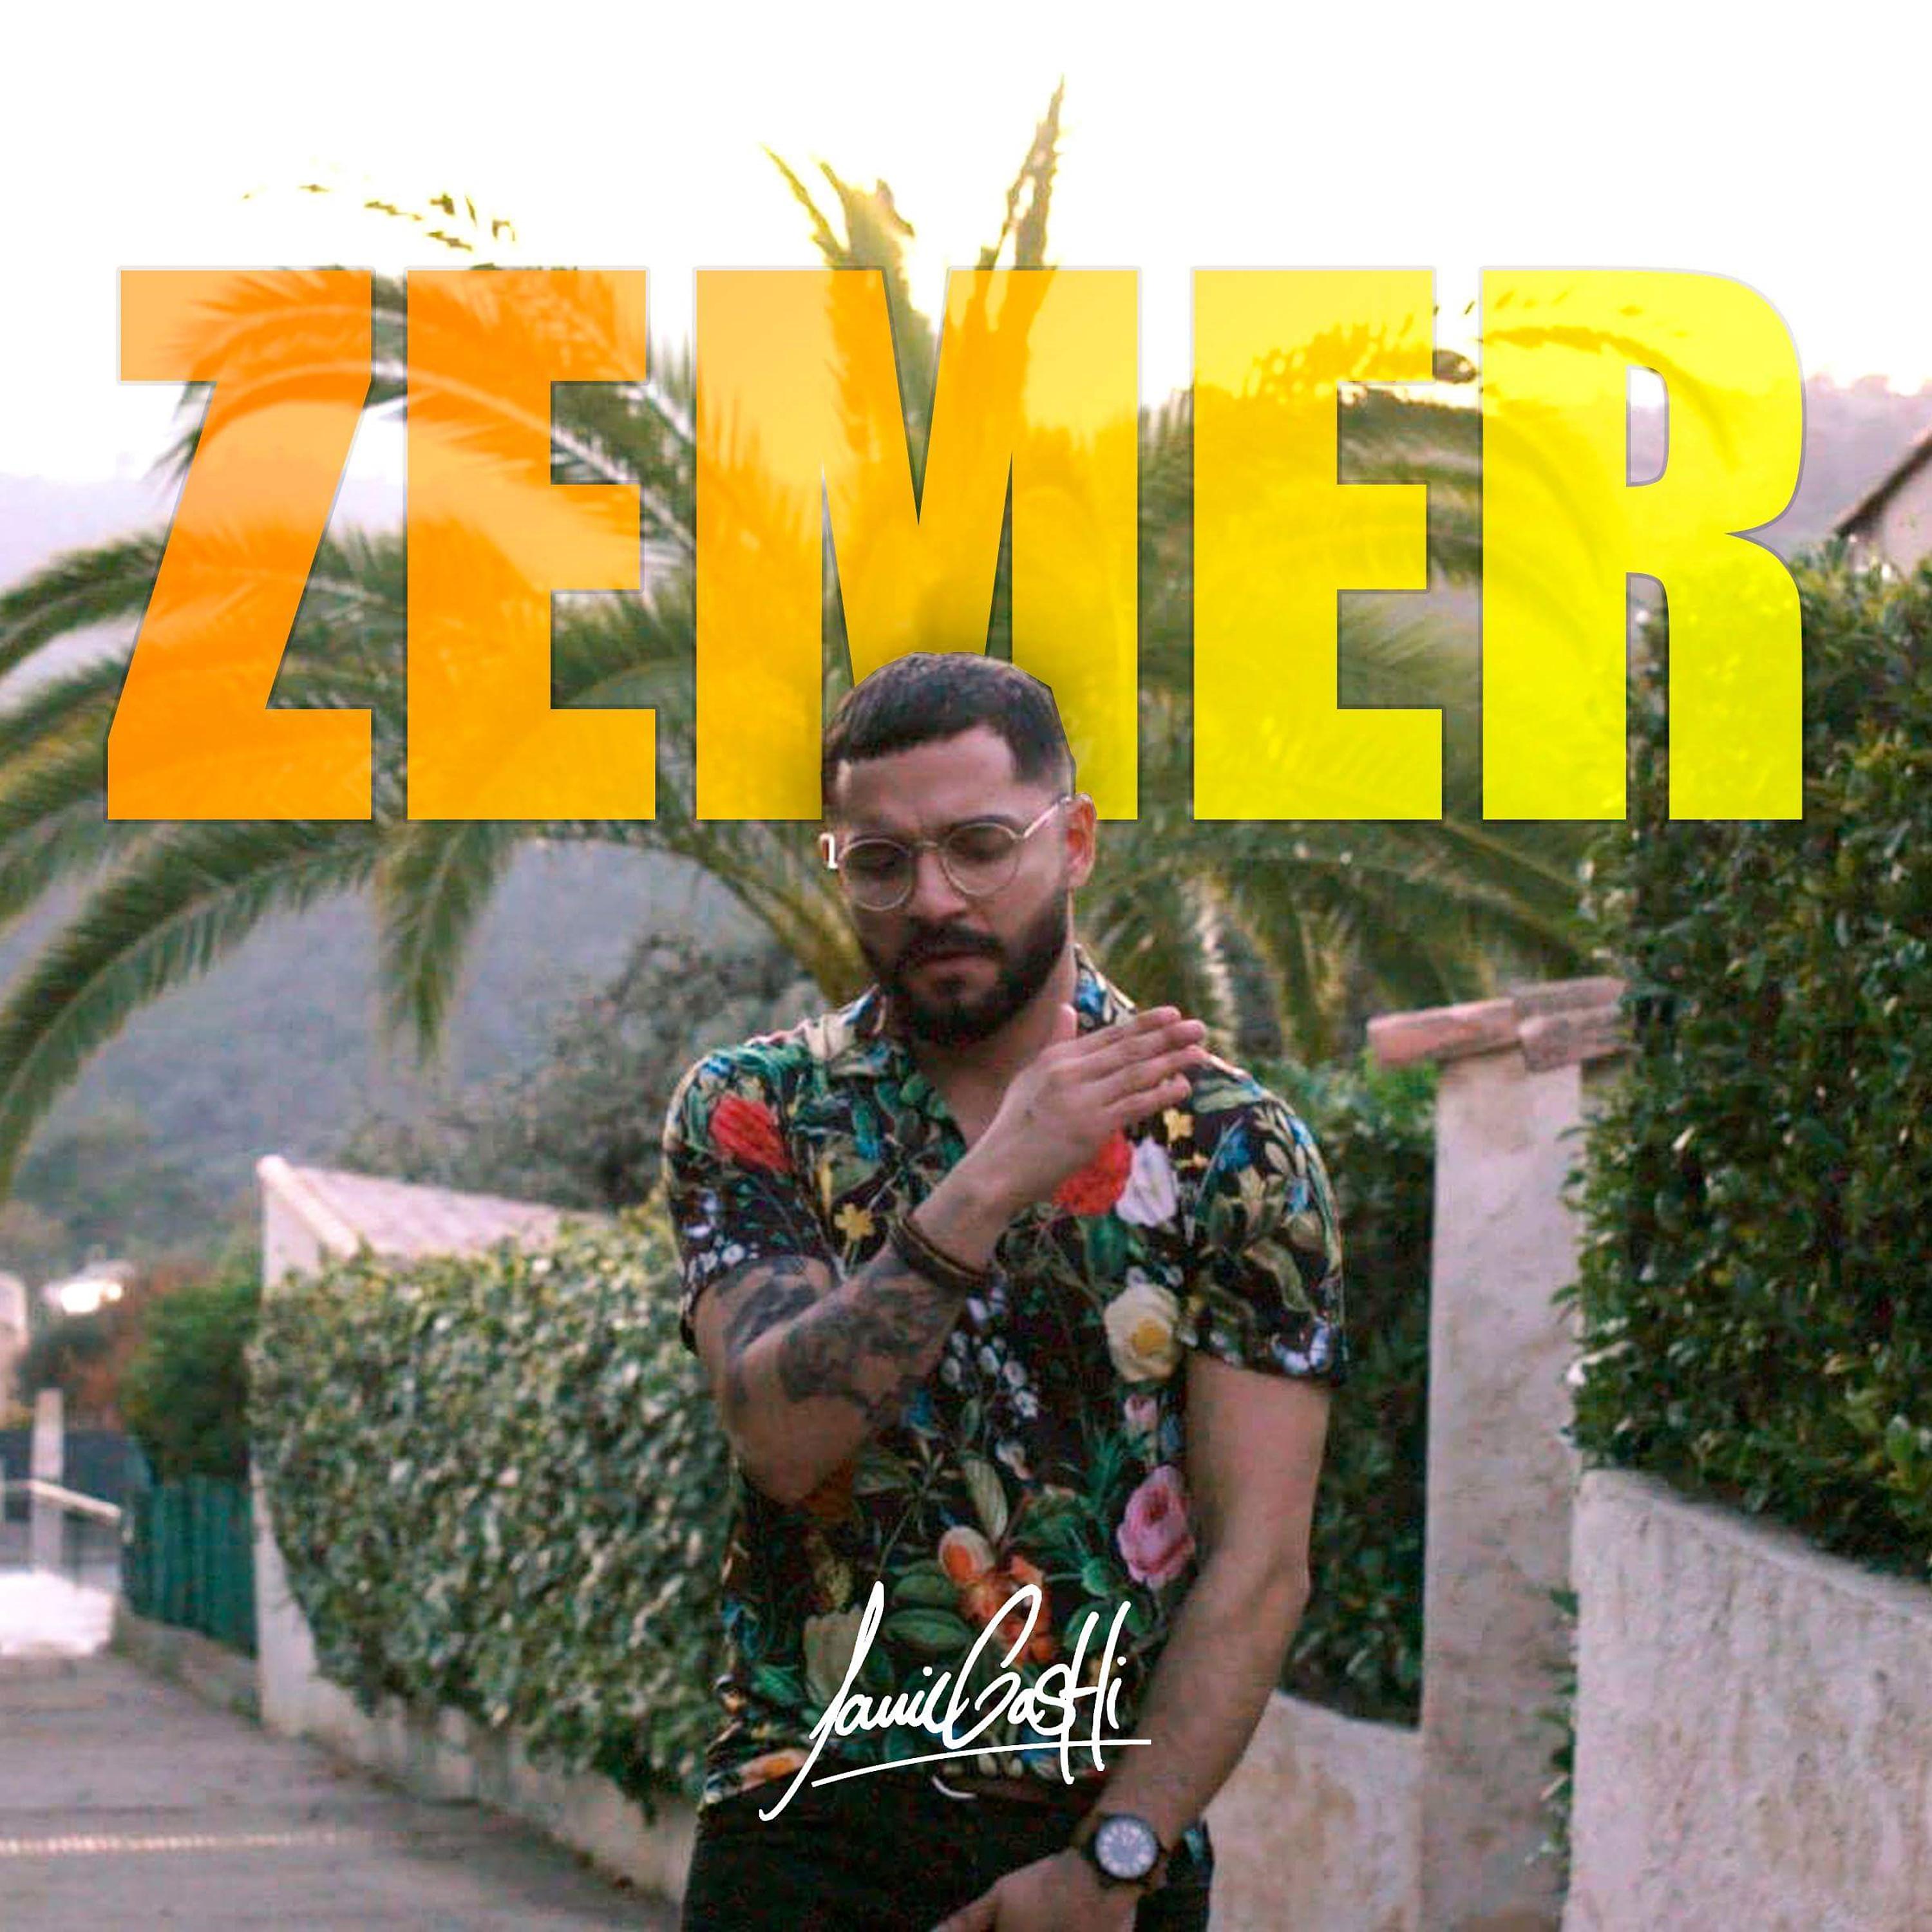 Постер альбома Zemer